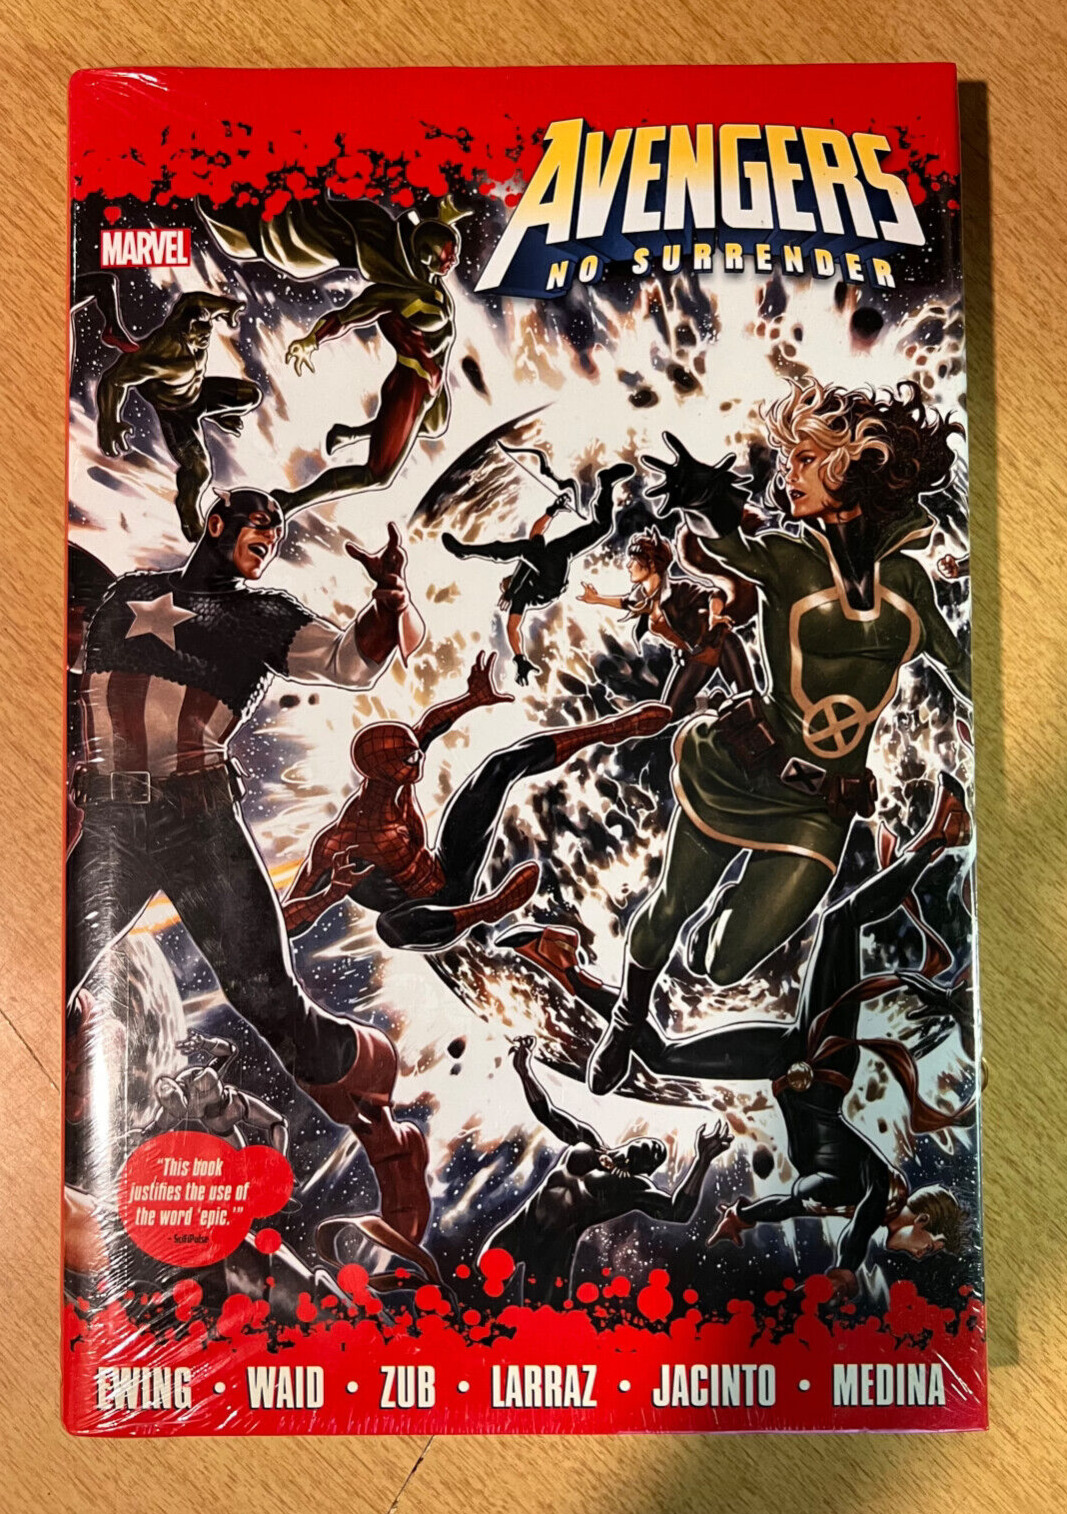 MARVEL - Avengers: No Surrender - Hardcover Graphic Novel - Brand New - Sealed